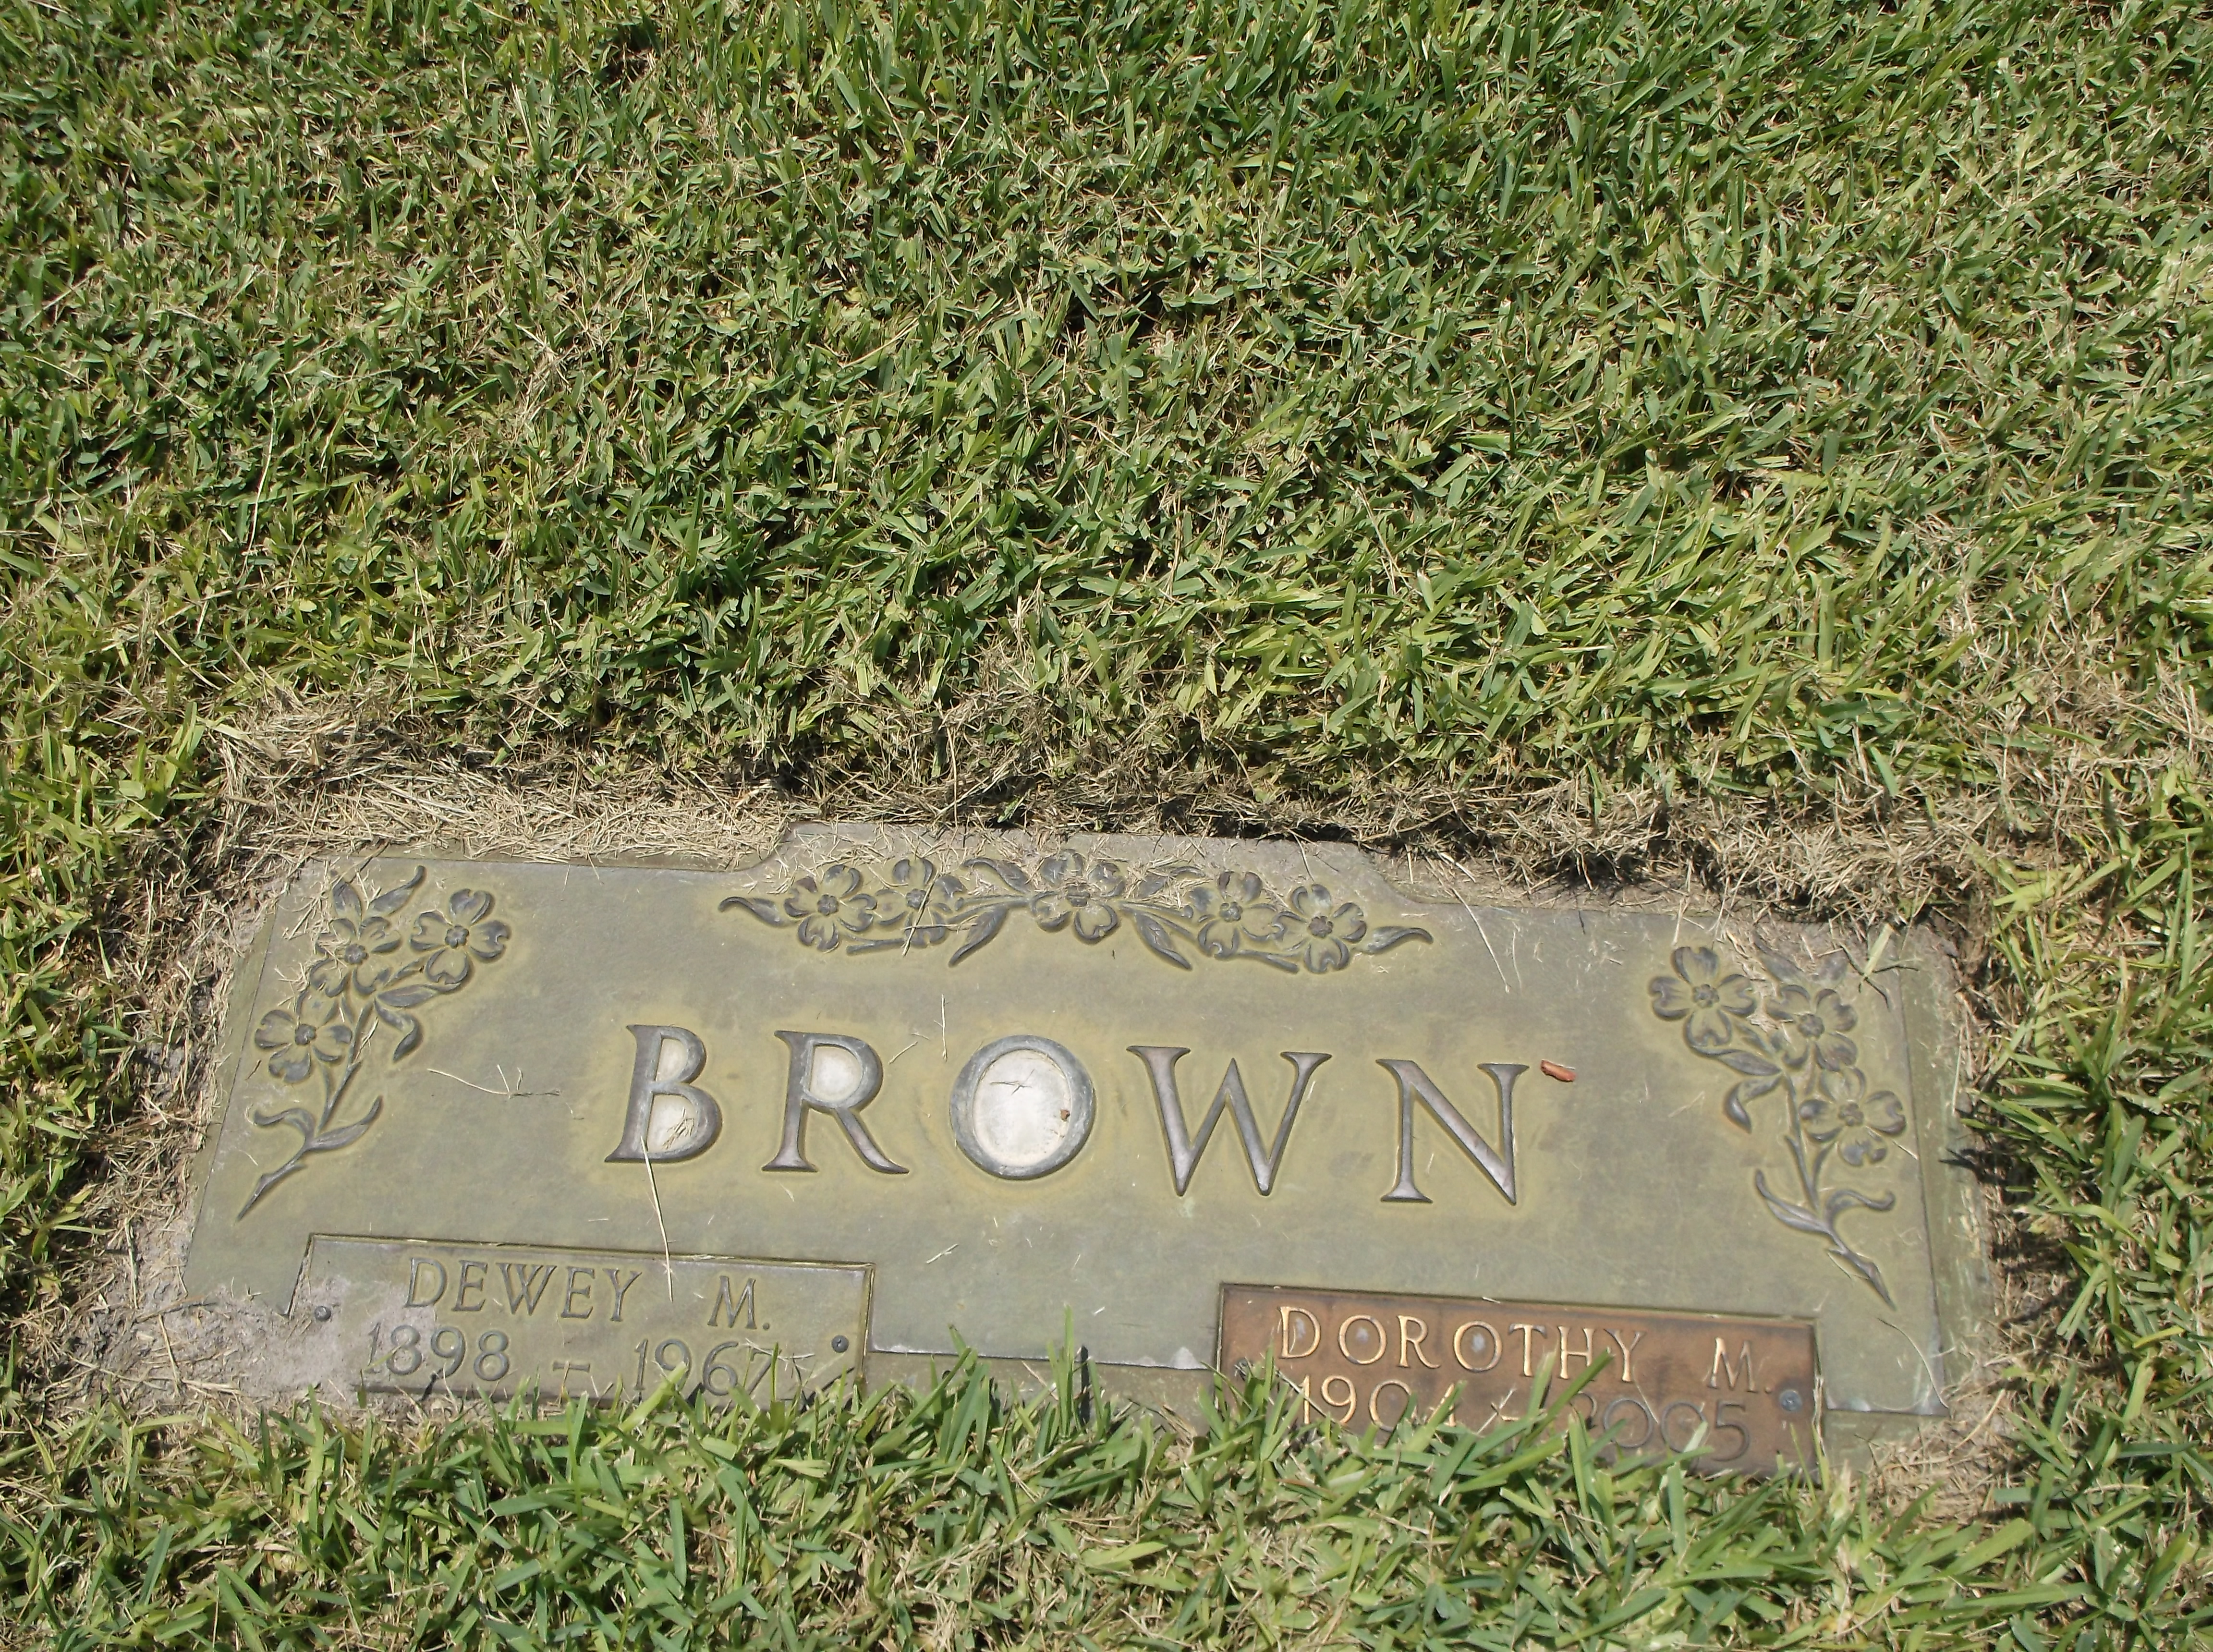 Dewey M Brown